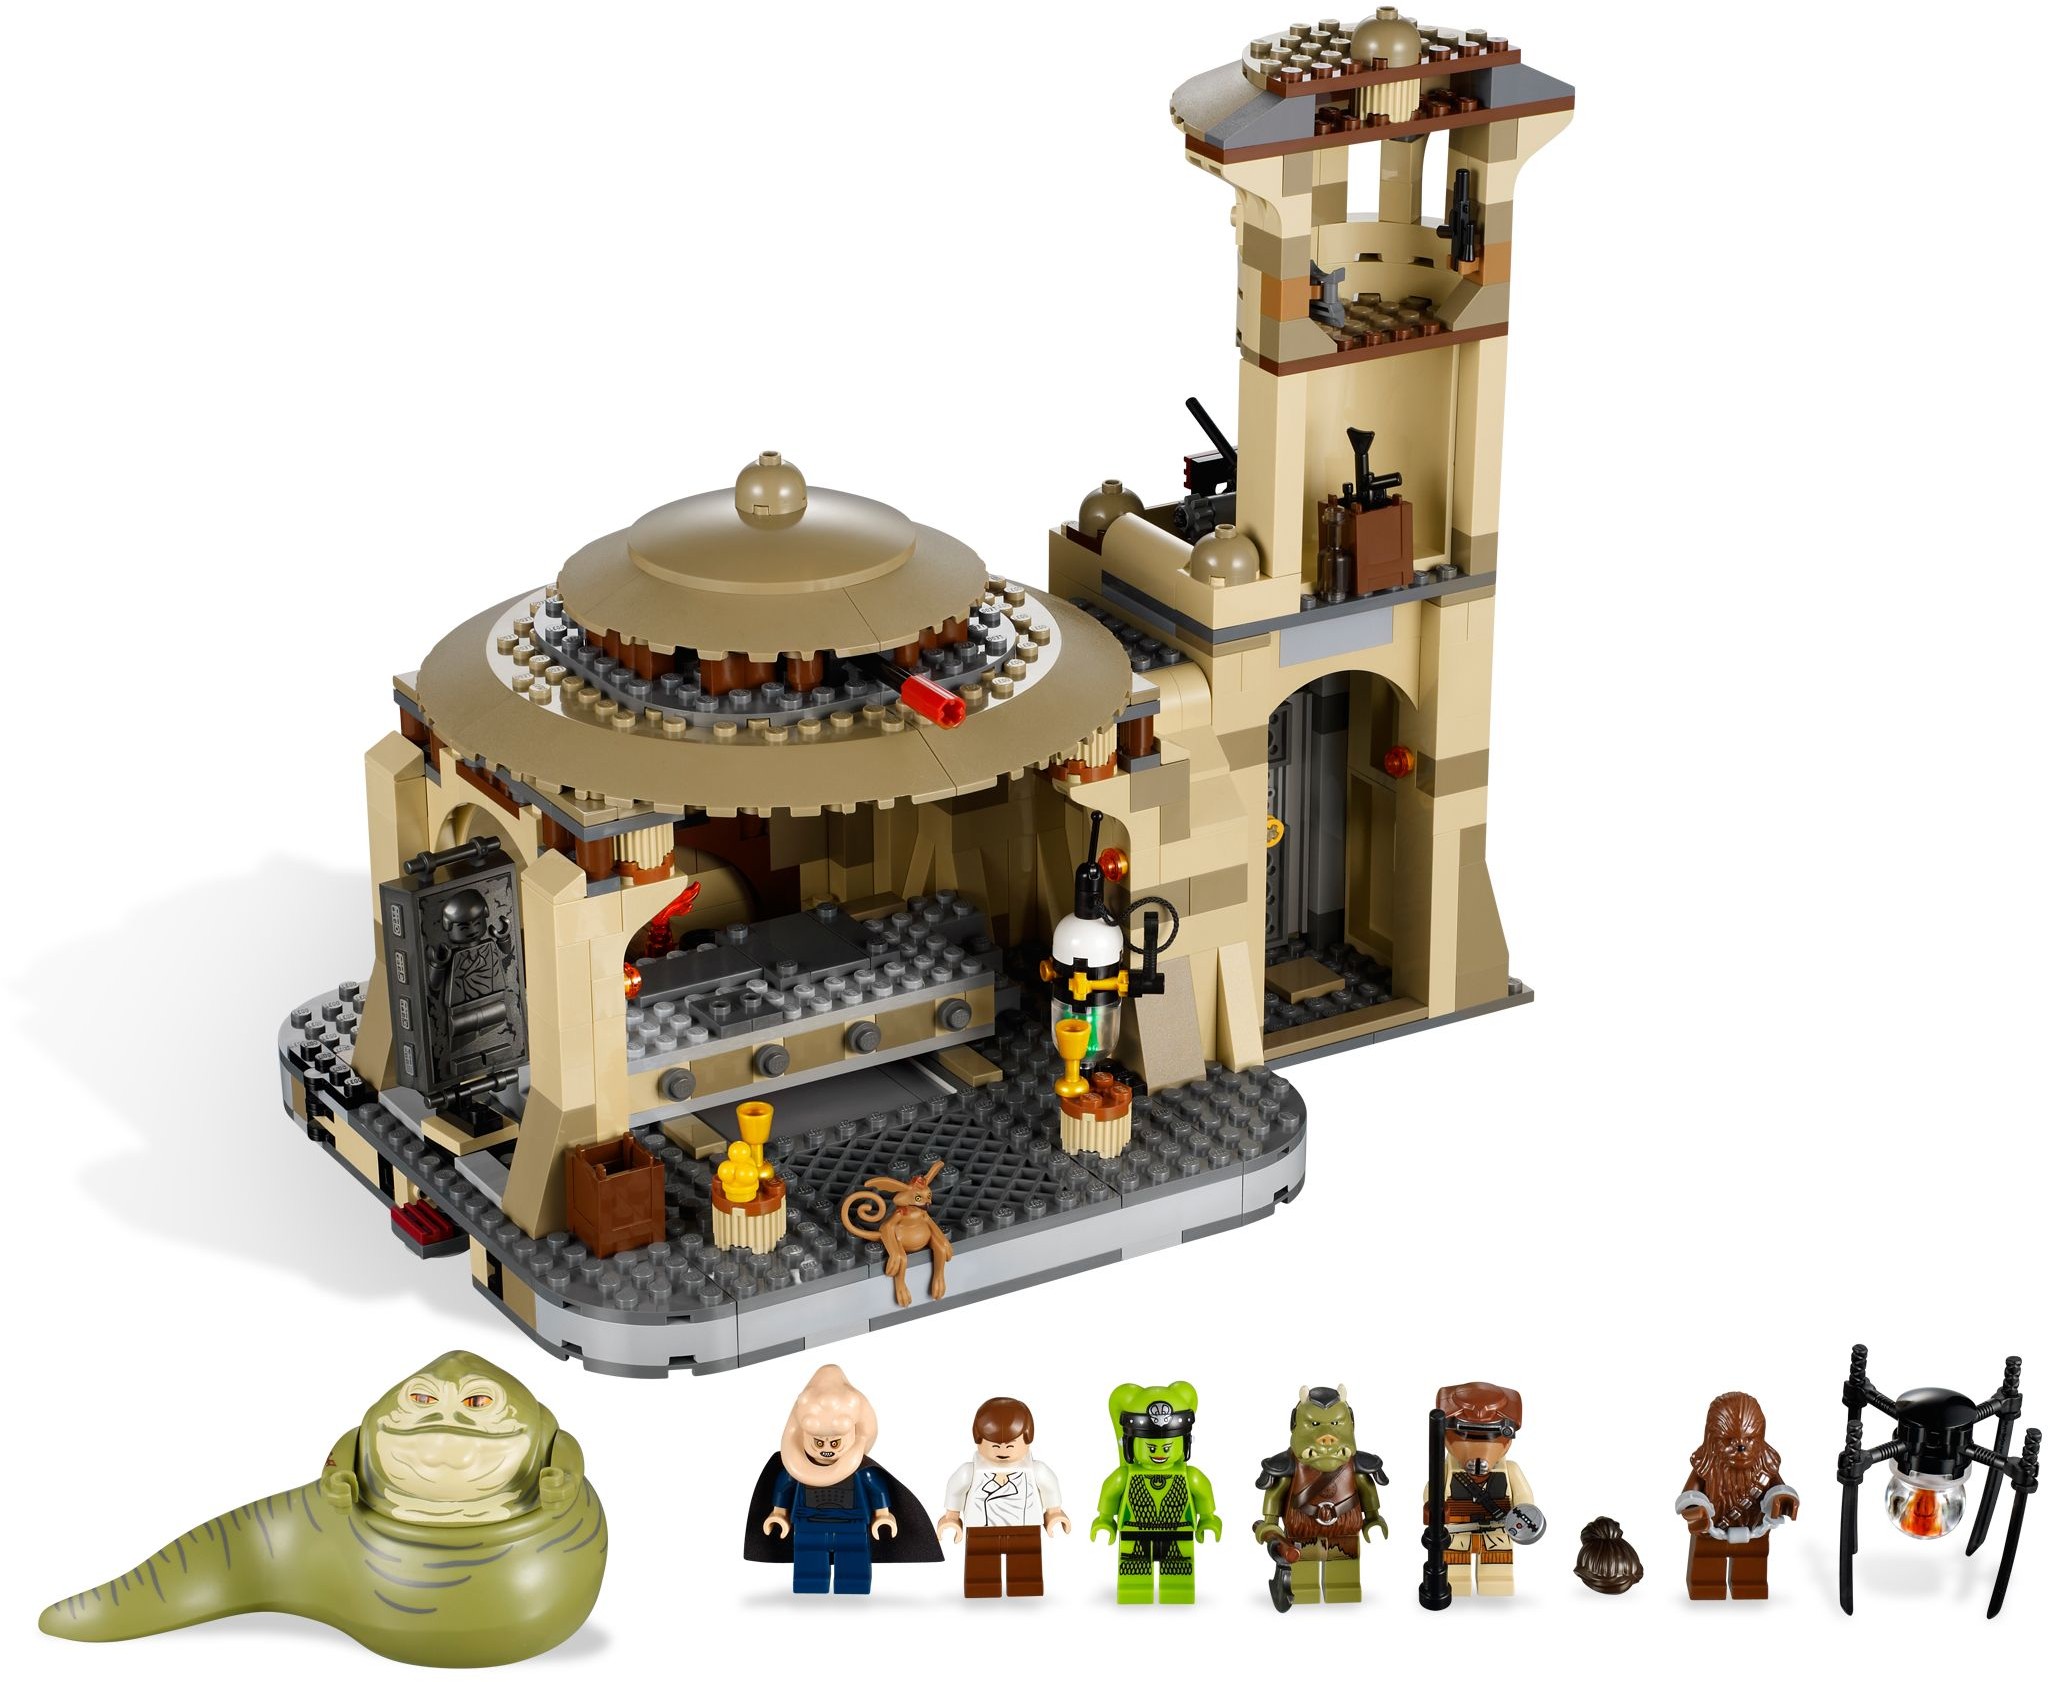 LEGO minifigures In set 9516-1 | Brickset